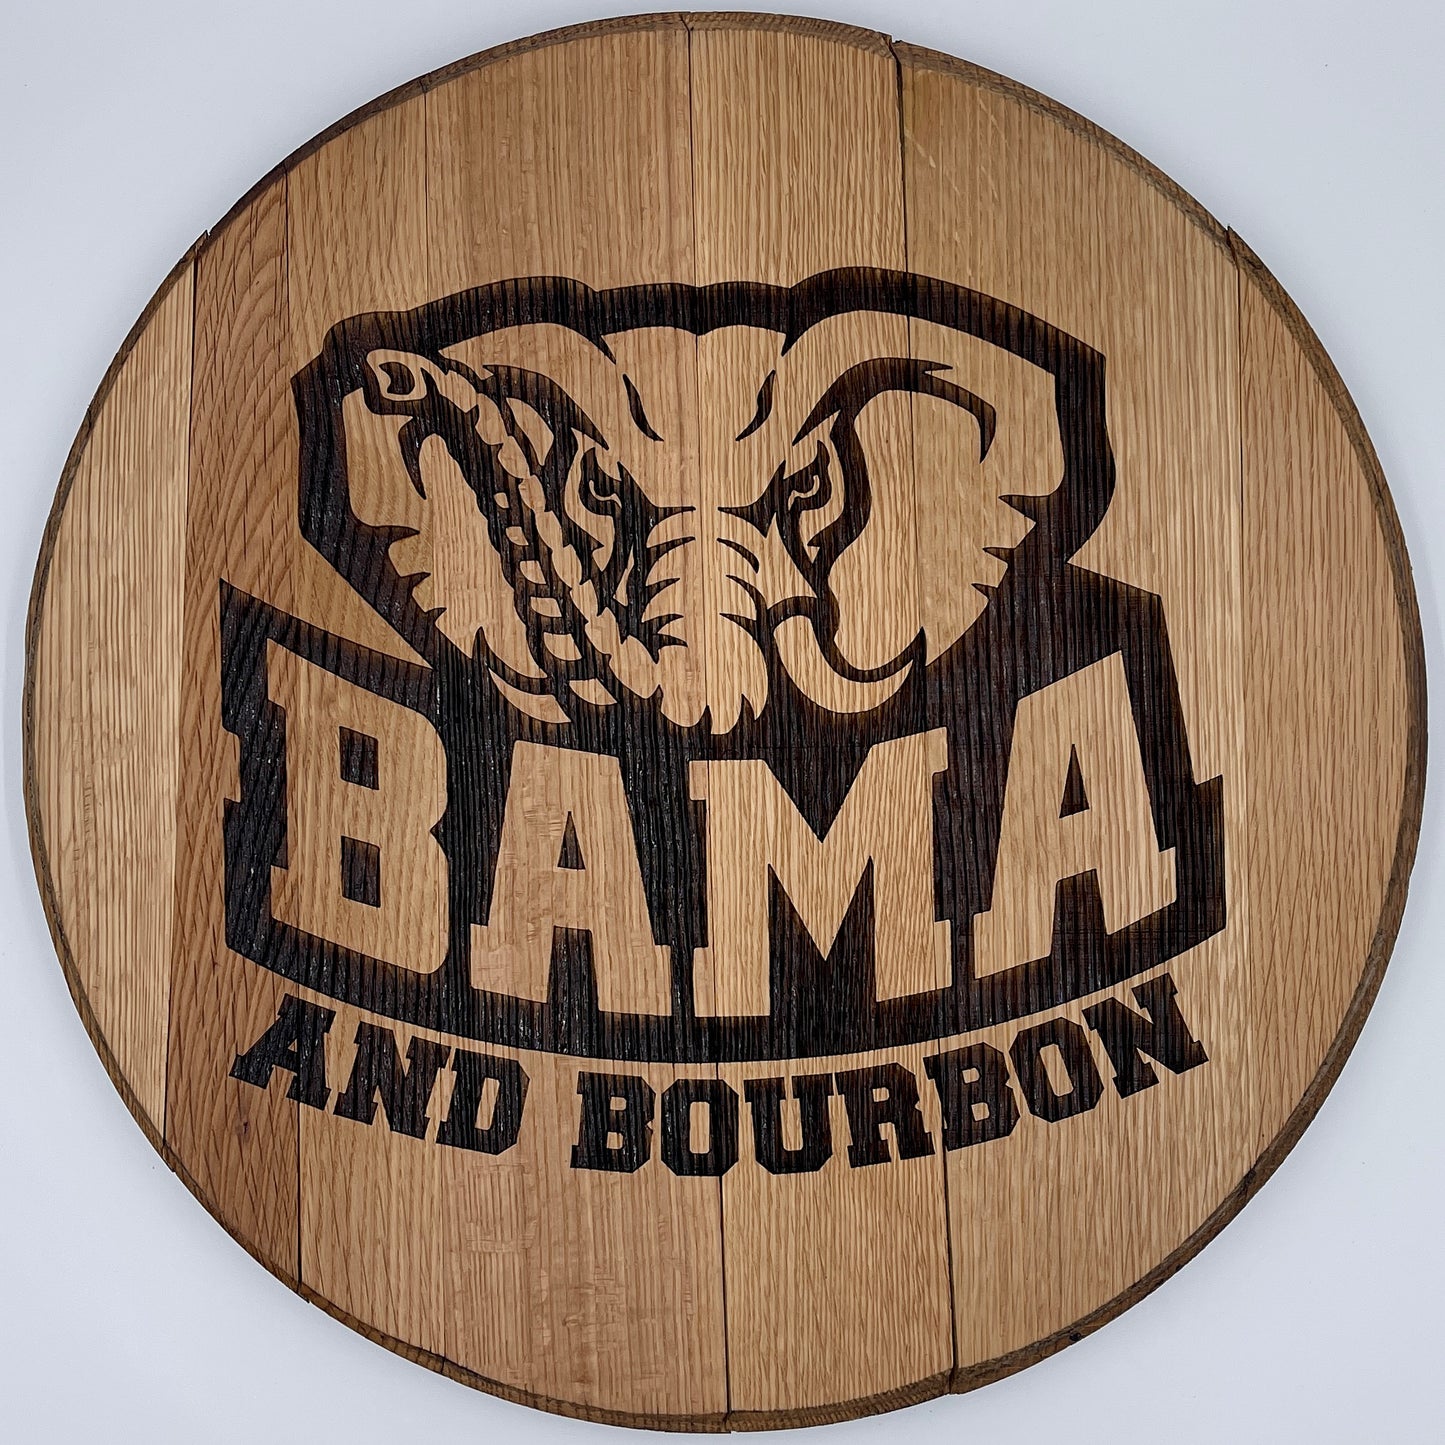 Bama and Bourbon